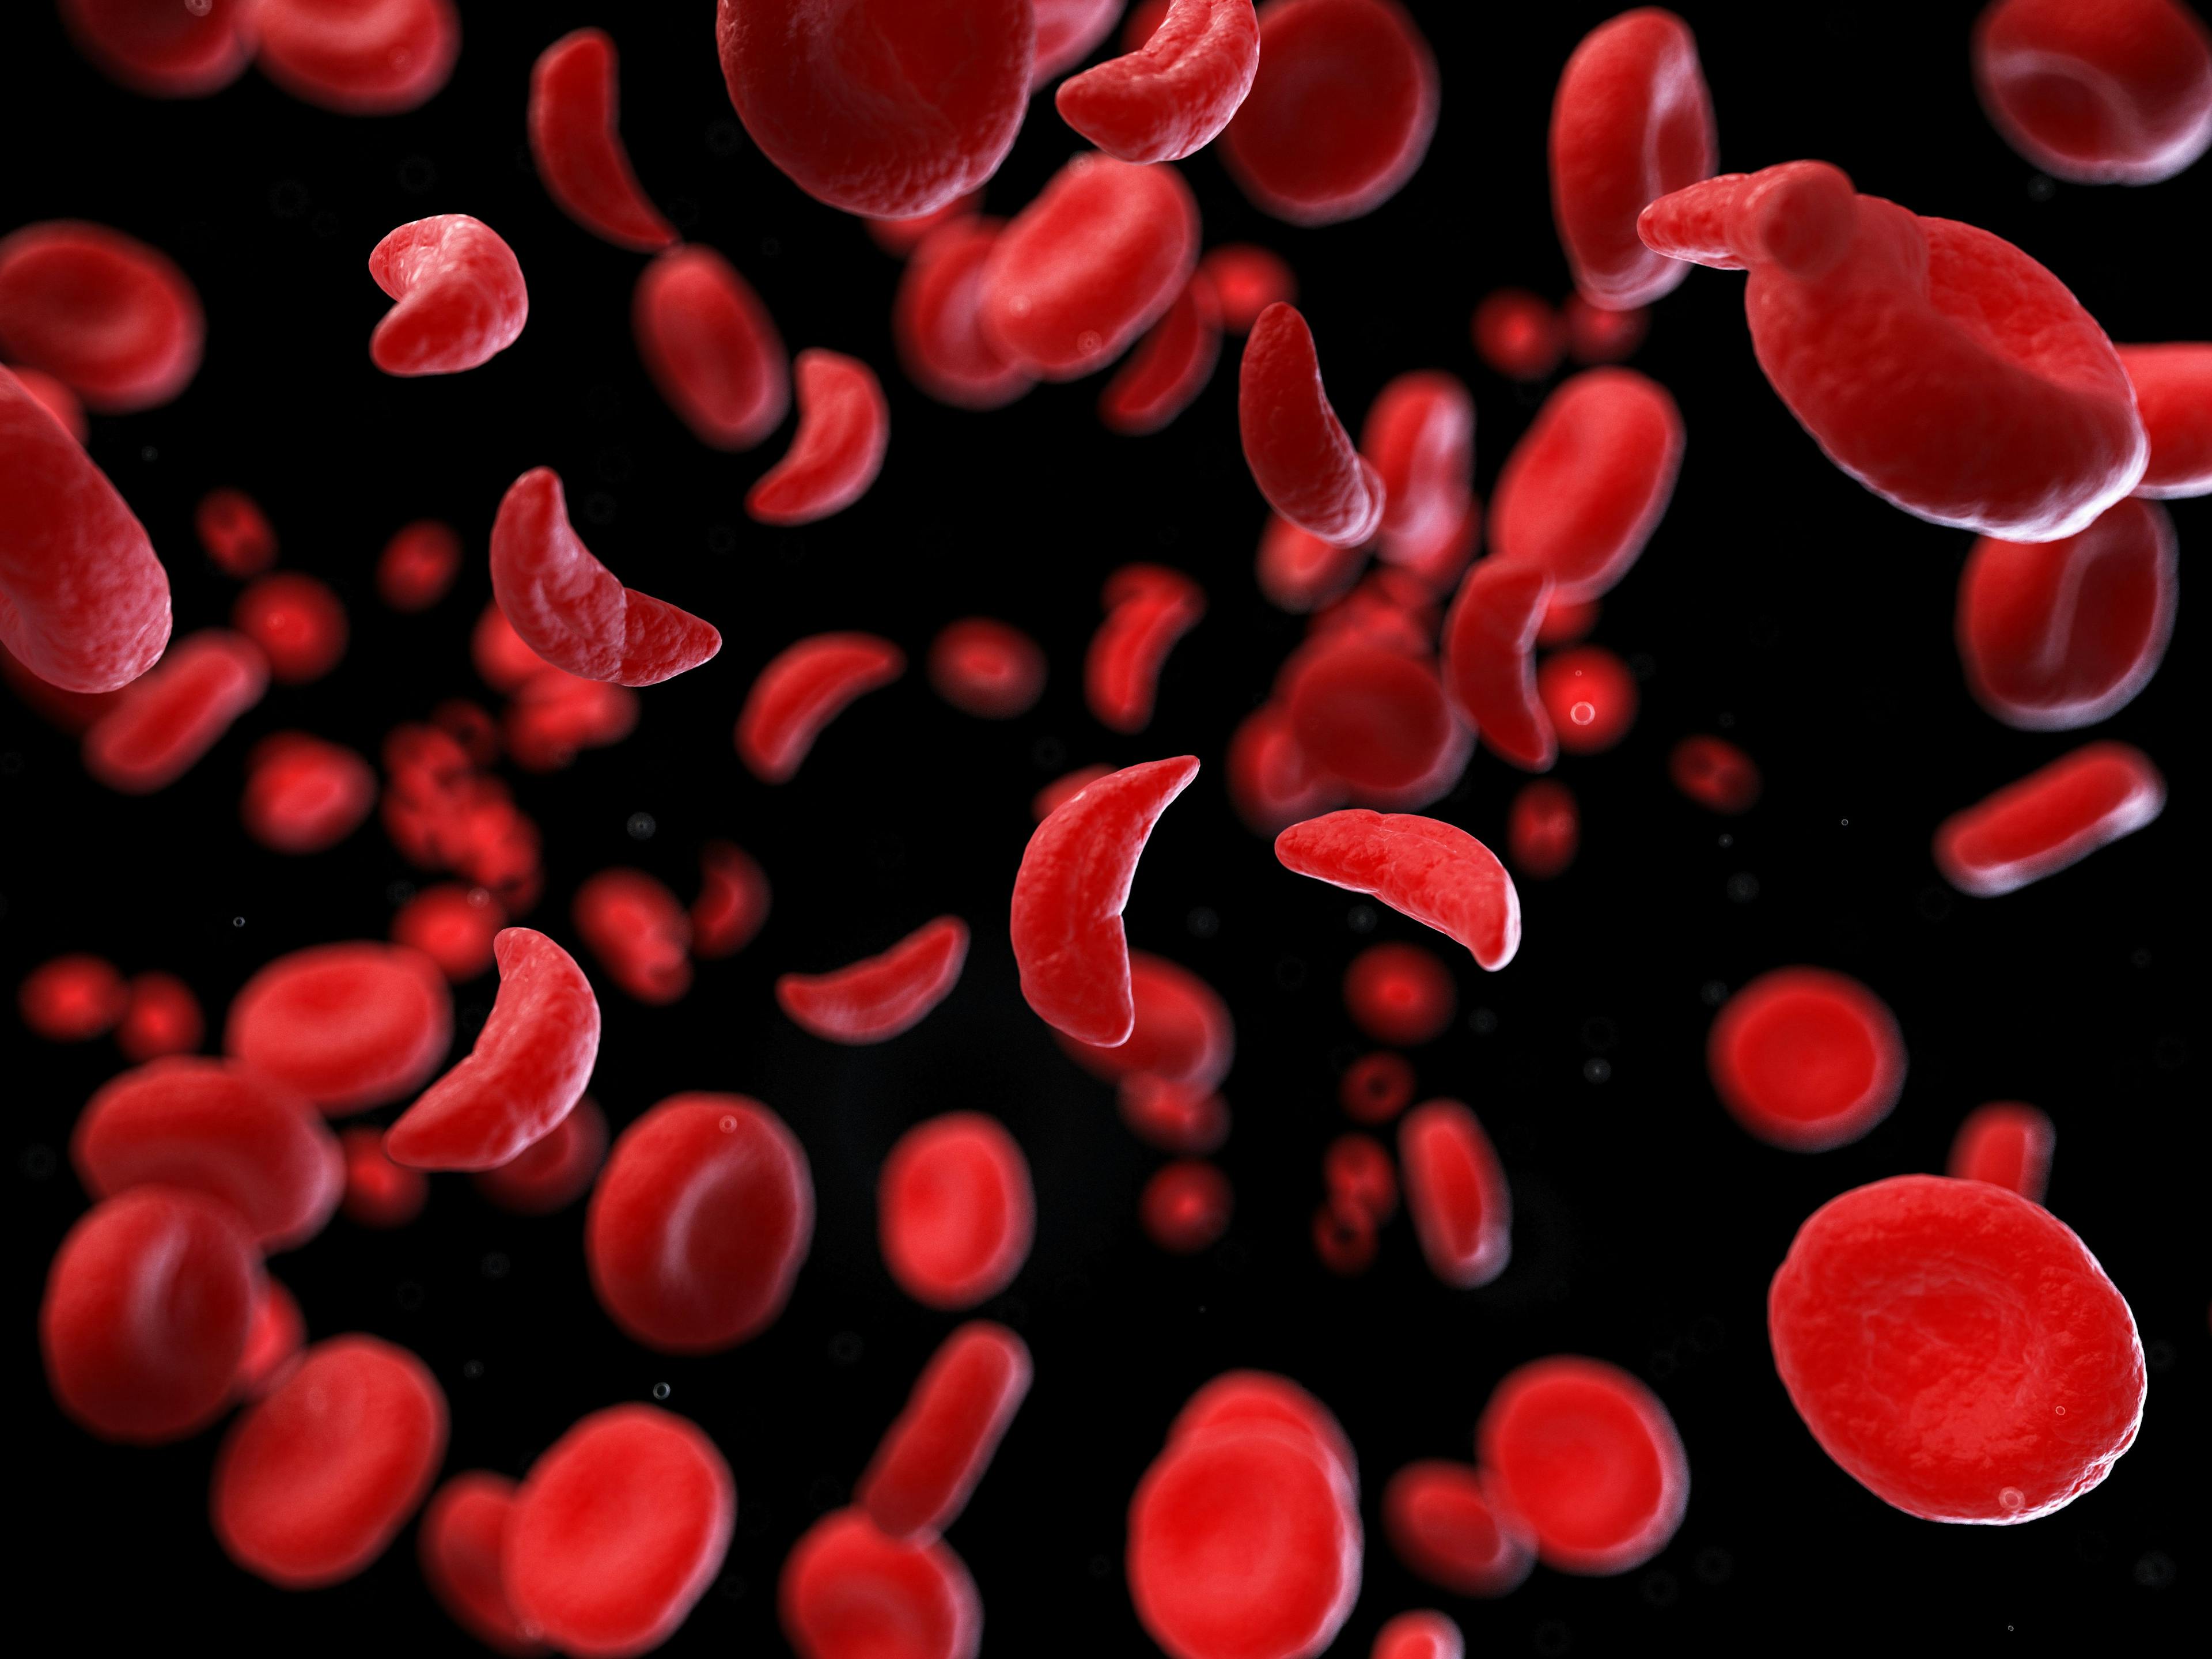 Model of Sickled Cells | image credit: Sebastian Kaulitzki - stock.adobe.com